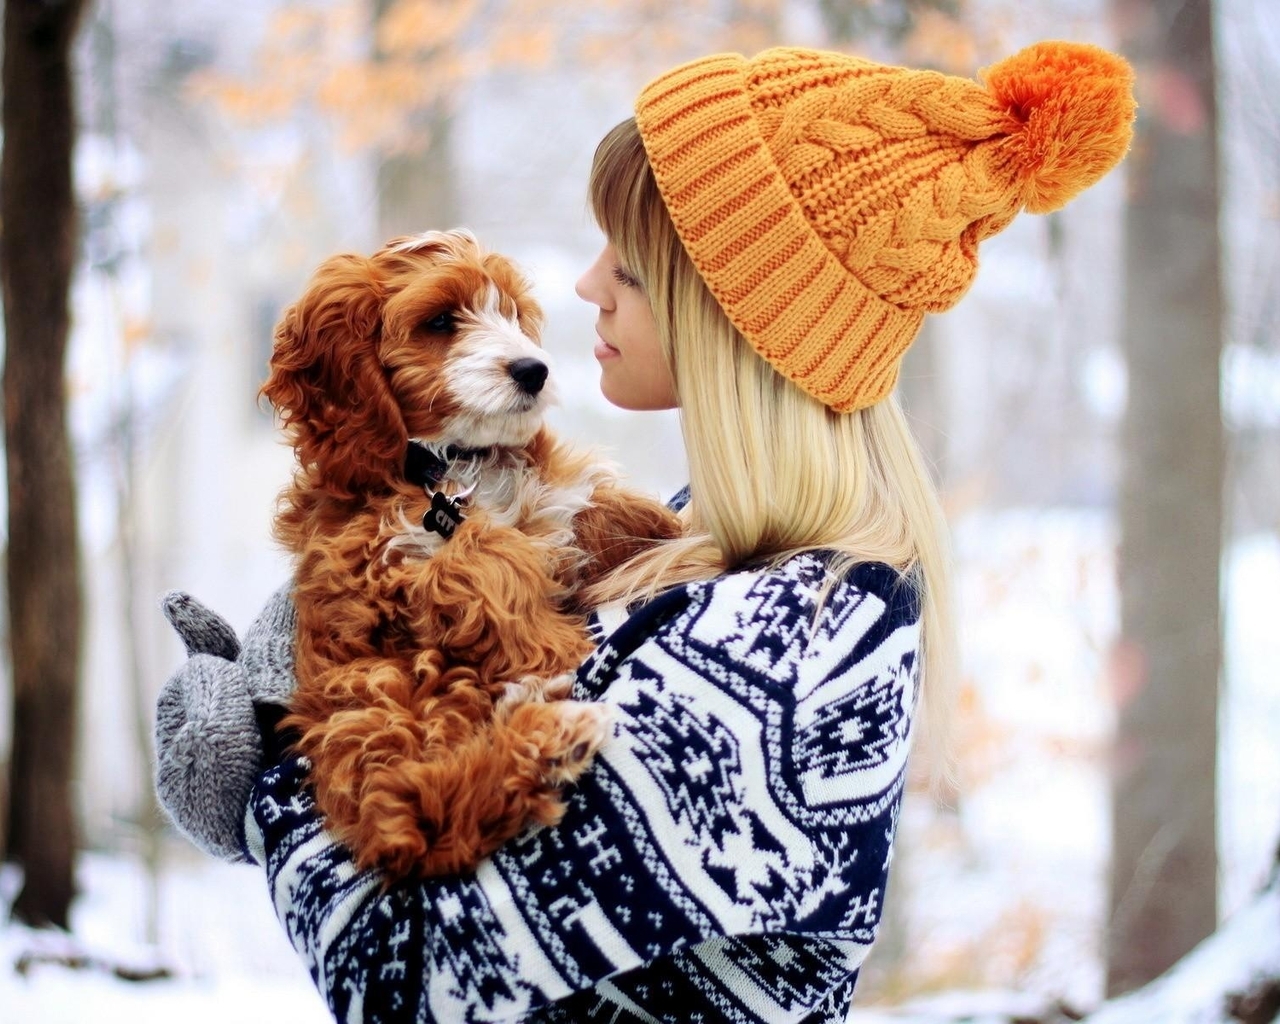 Картинка: Девушка, кофта, шапка, варежки, собака, друг, зима, снег, деревья, держит